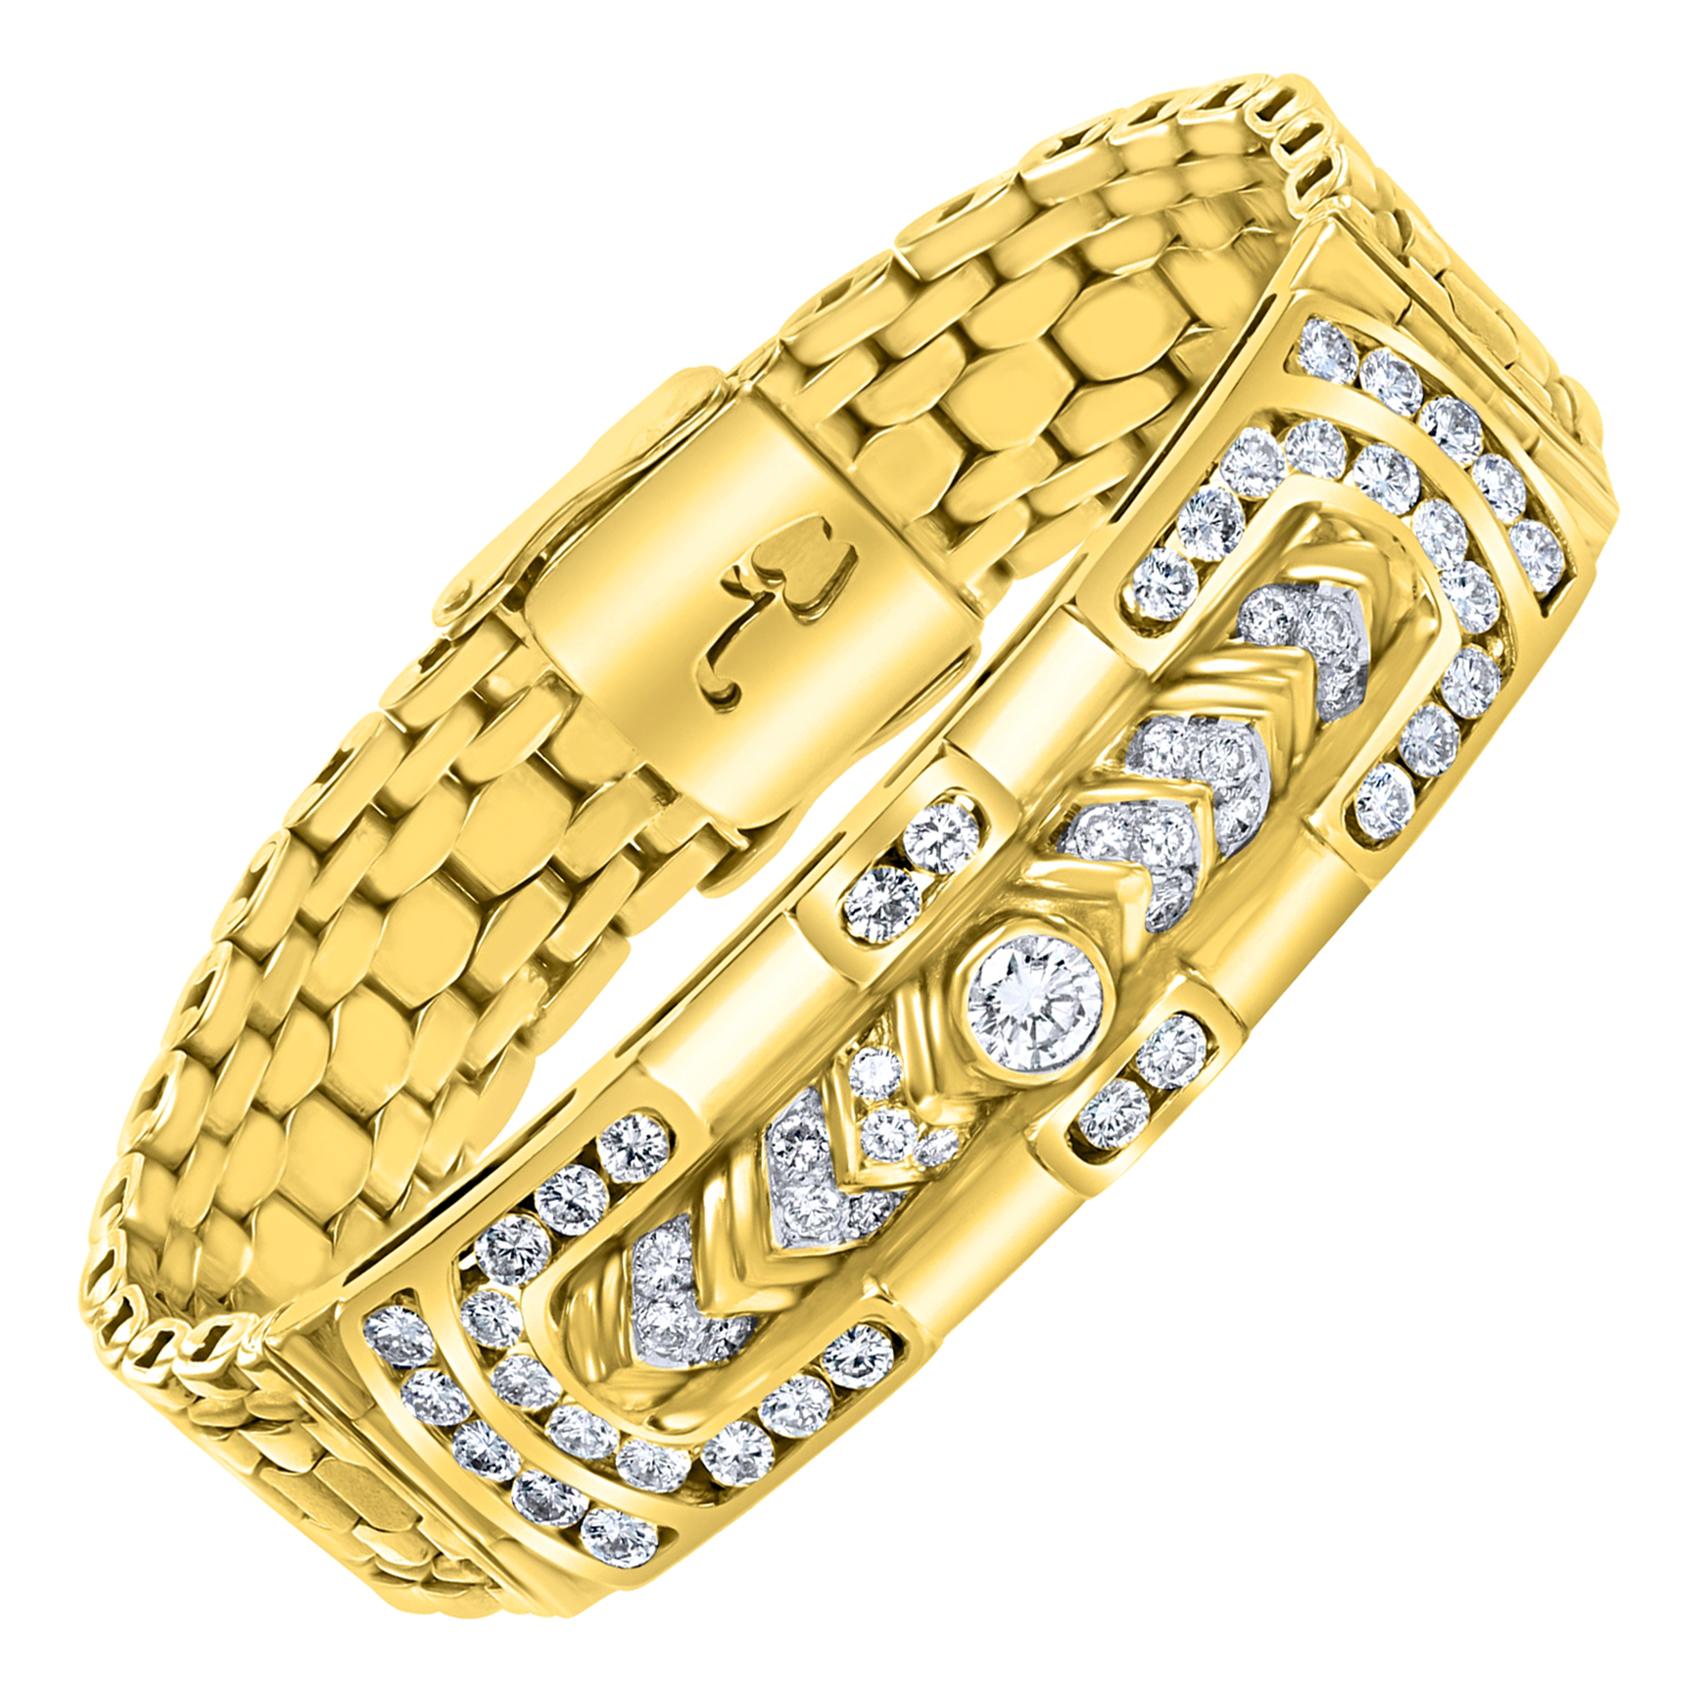 4.5 Carat Diamond Bracelet in 18 Karat Yellow Gold, 62 Grams, Estate, Unisex